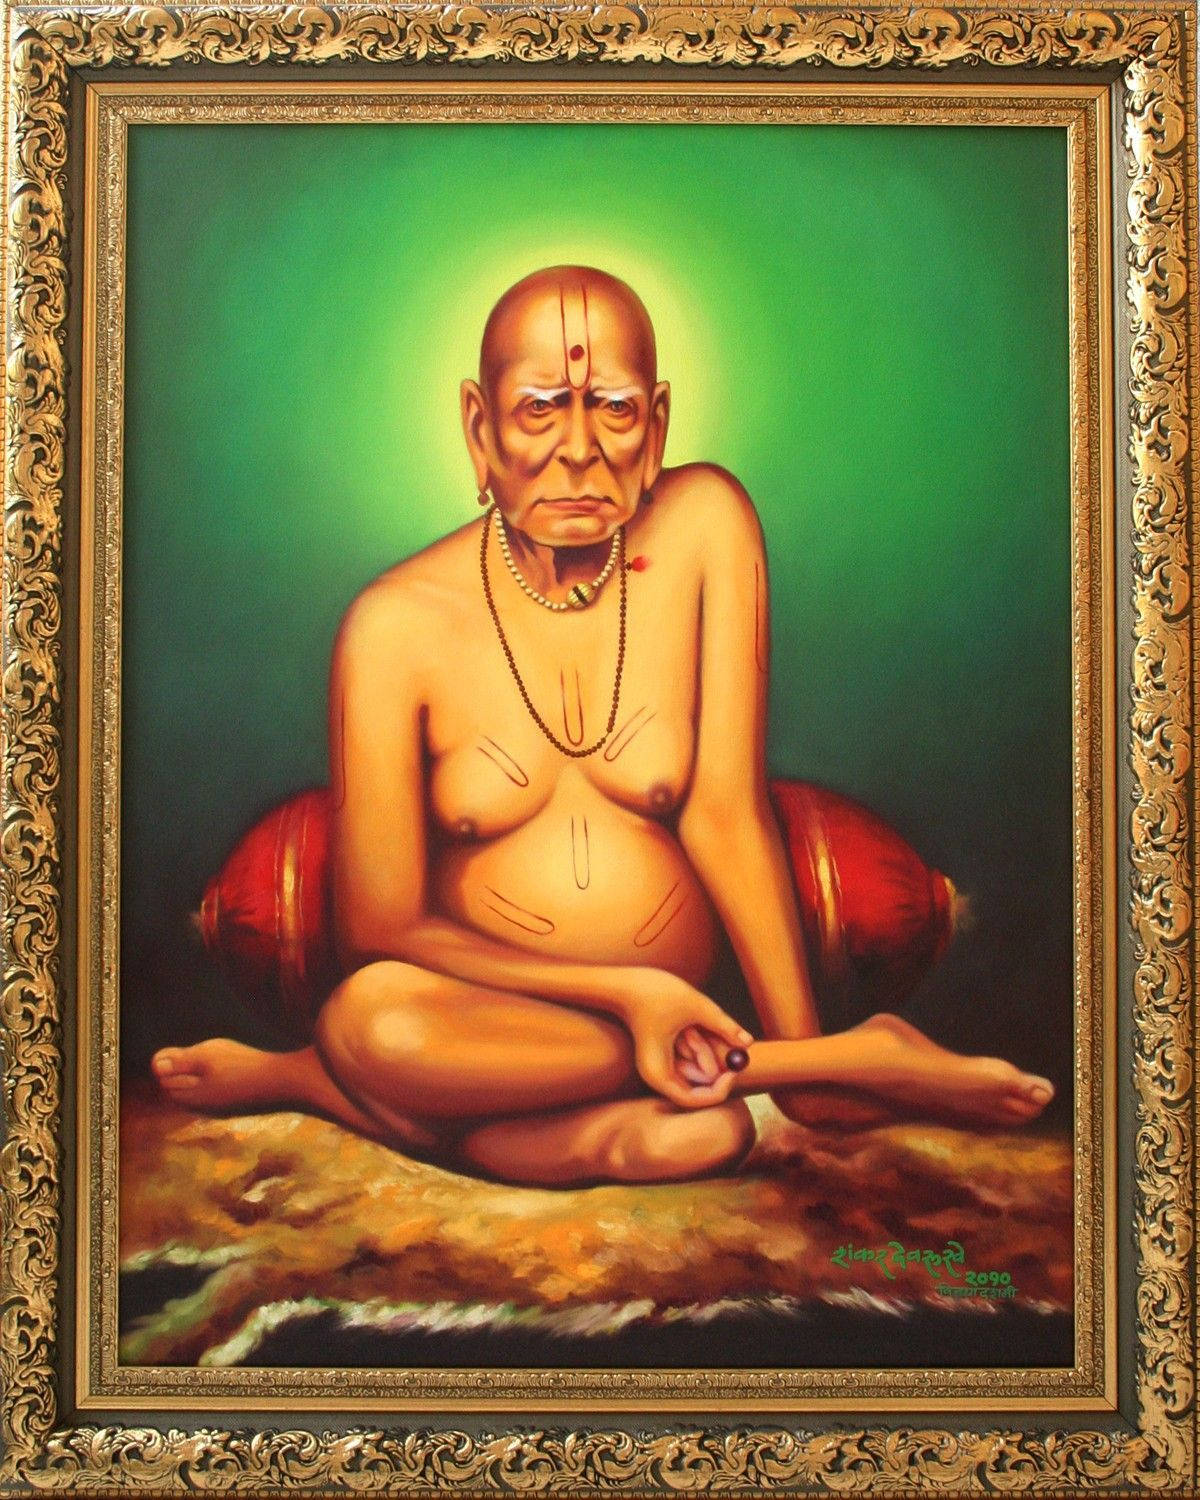 Shri Swami Samarth Framed With Green Background